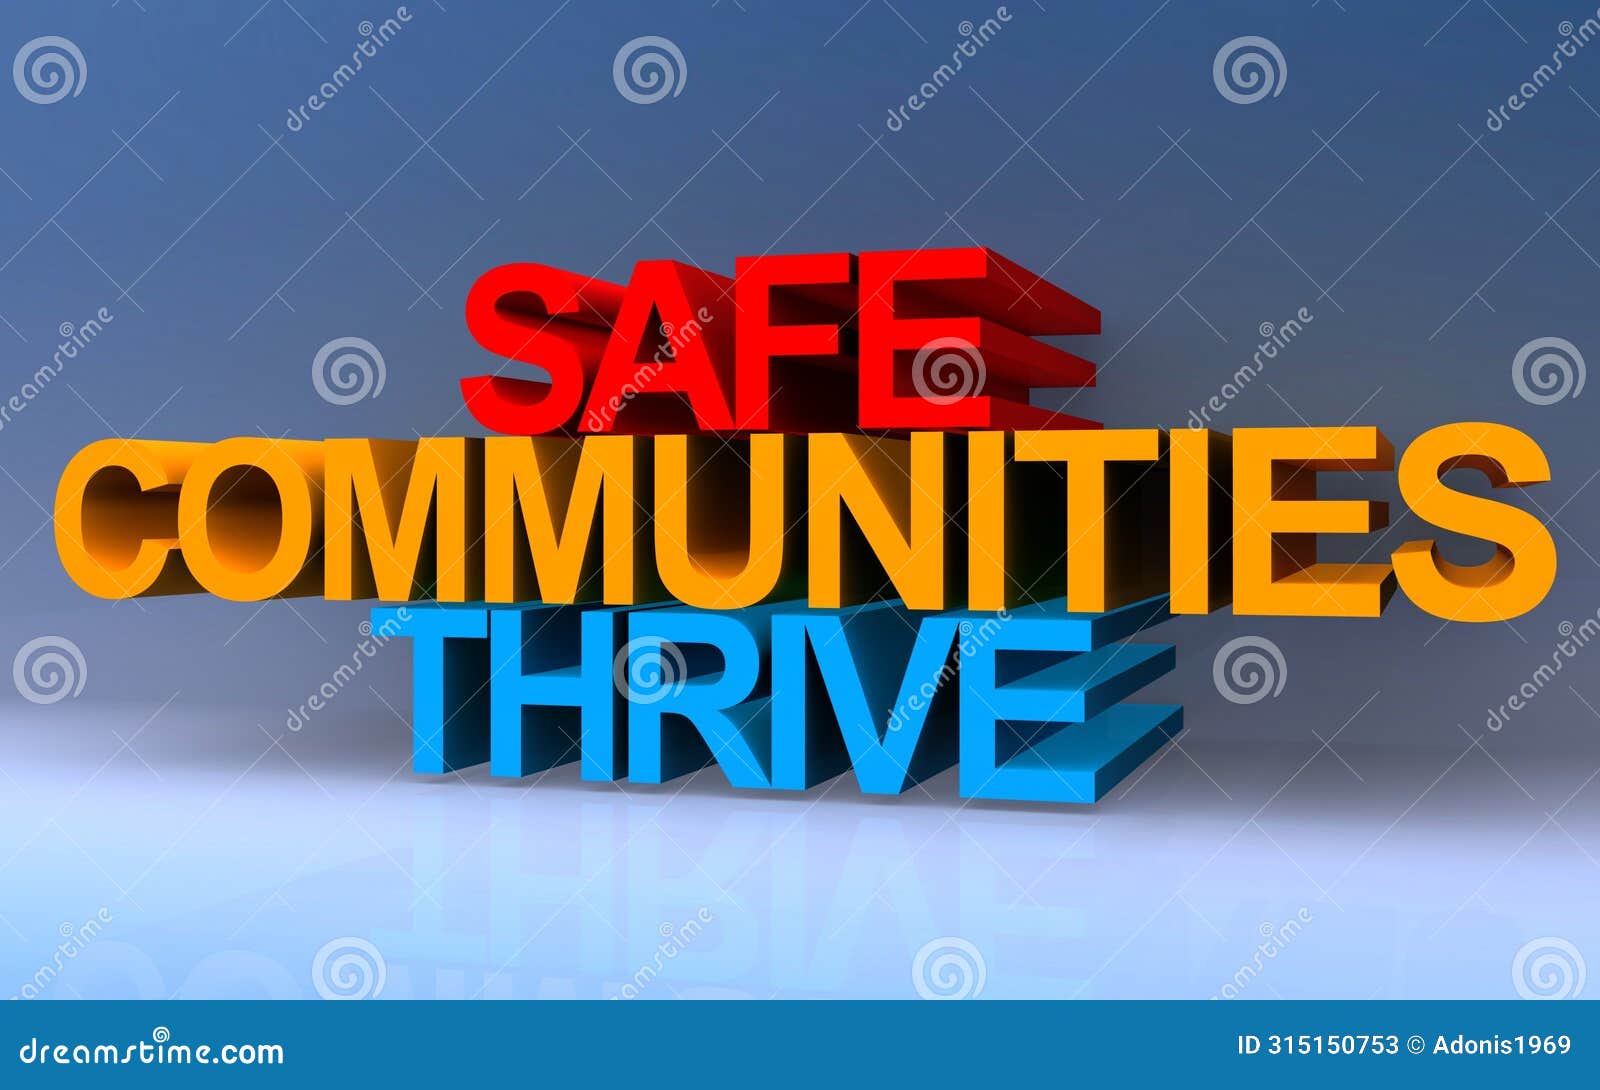 safe communities thrive on blue